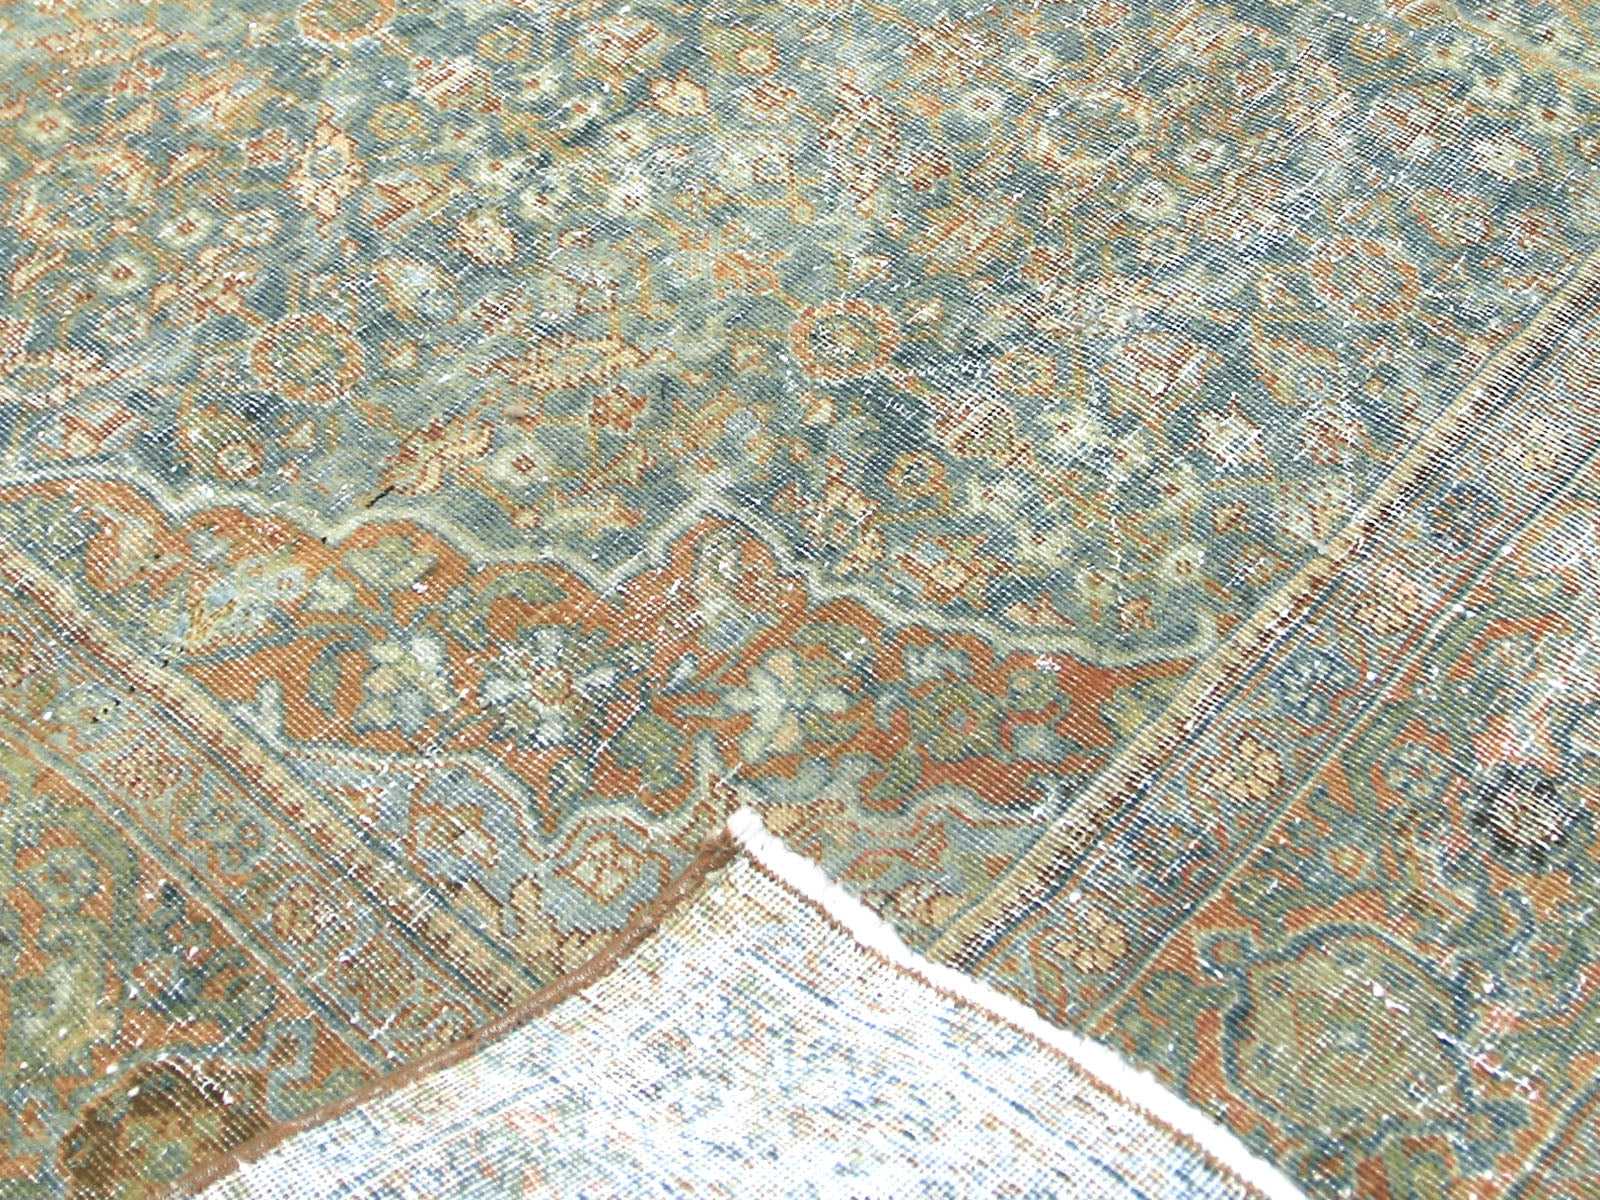 Antique Persian Tabriz Rug - 4'4" x 6'4"